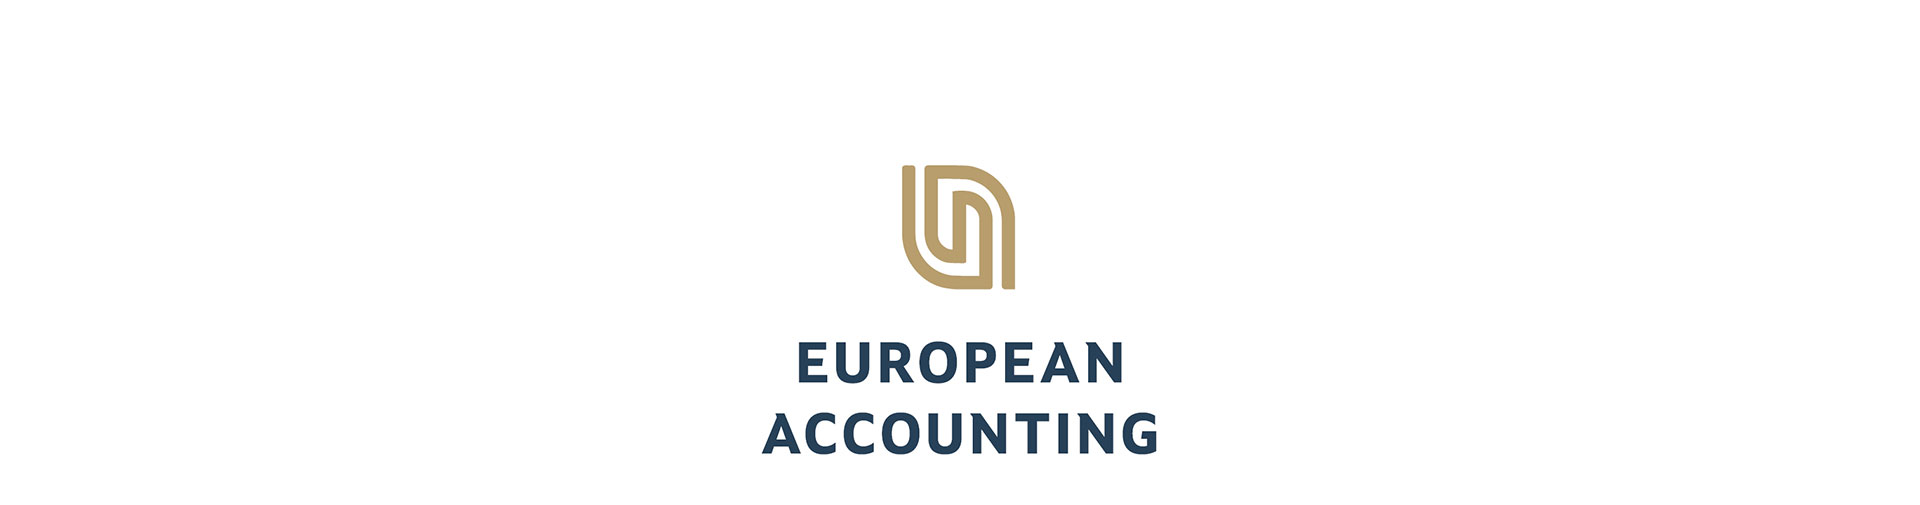 European Accounting Header Logo